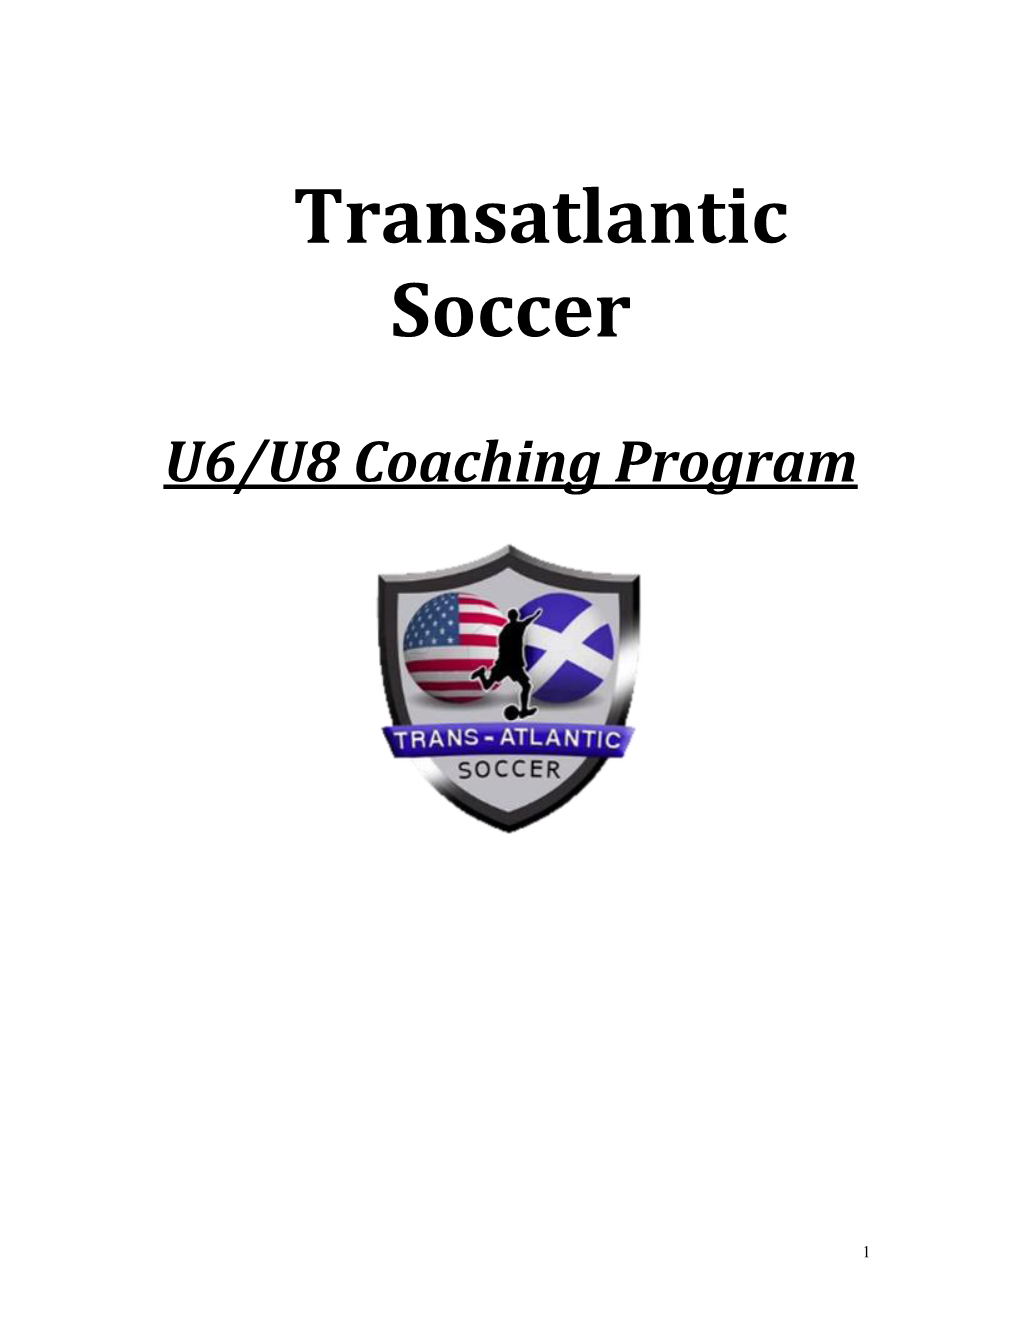 U6-U8 Transatlantic Soccer Coaching Manual